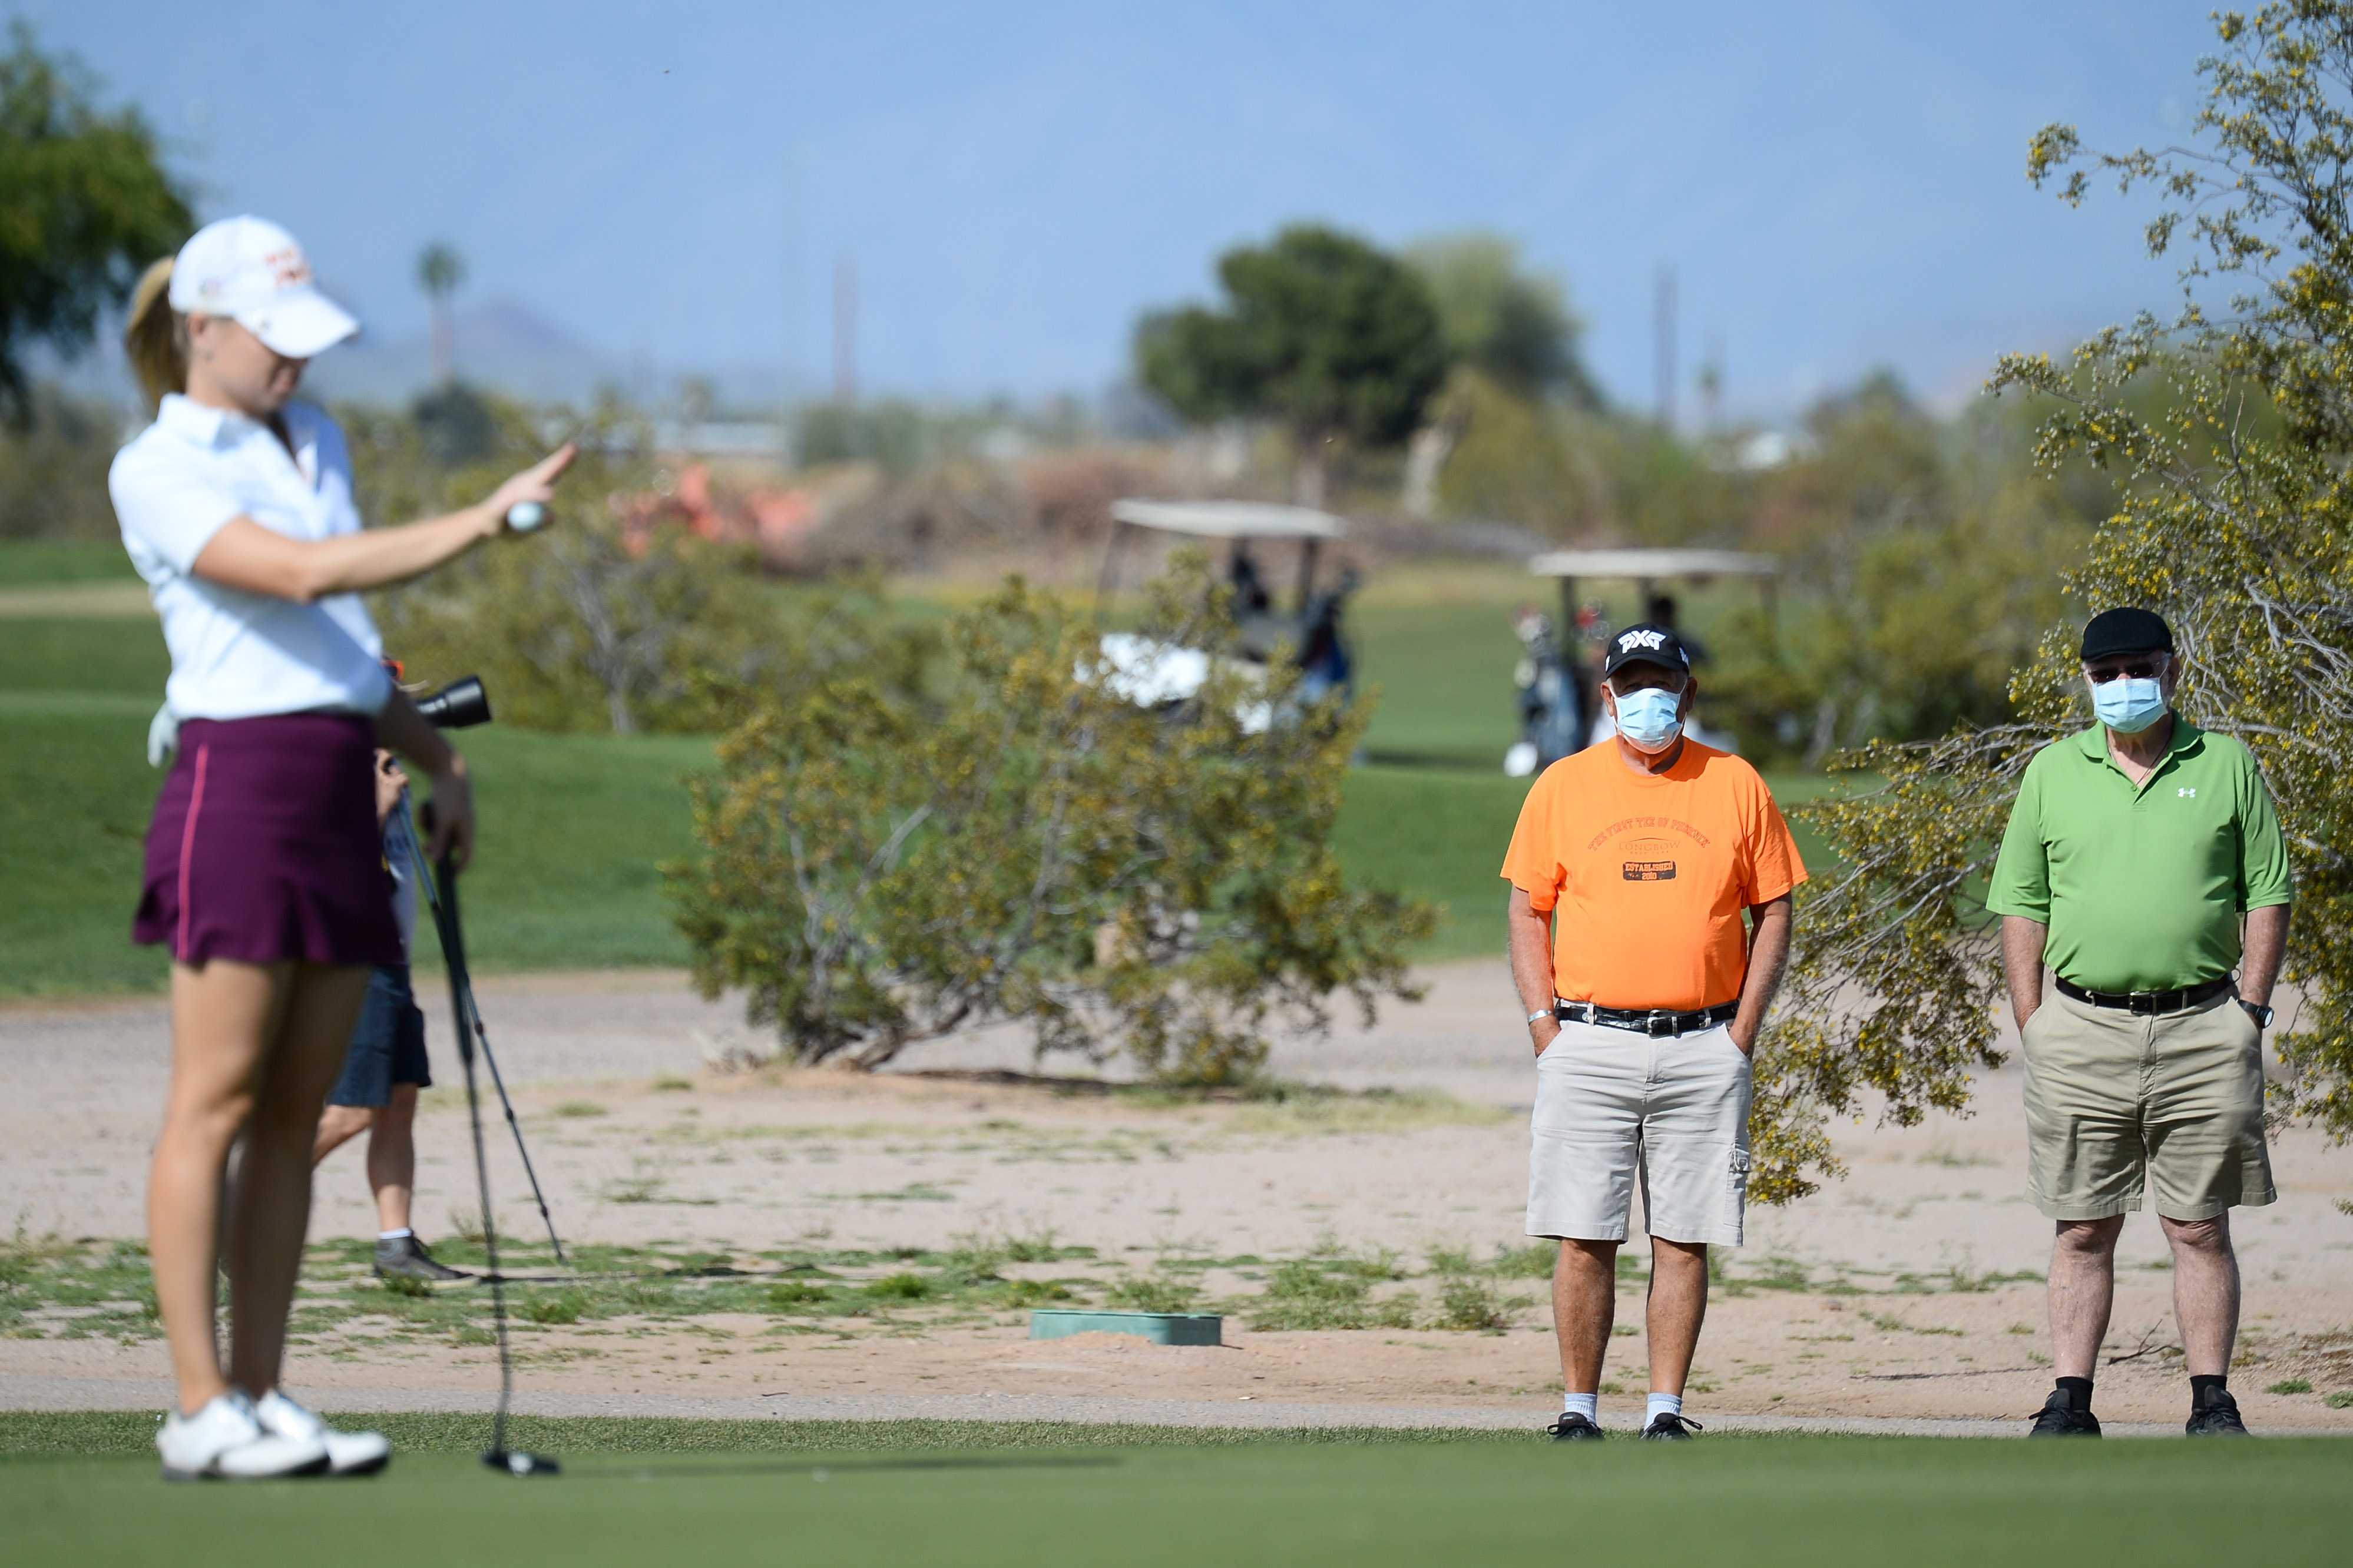 Golf courses reopen in Los Angeles despite coronavirus deaths